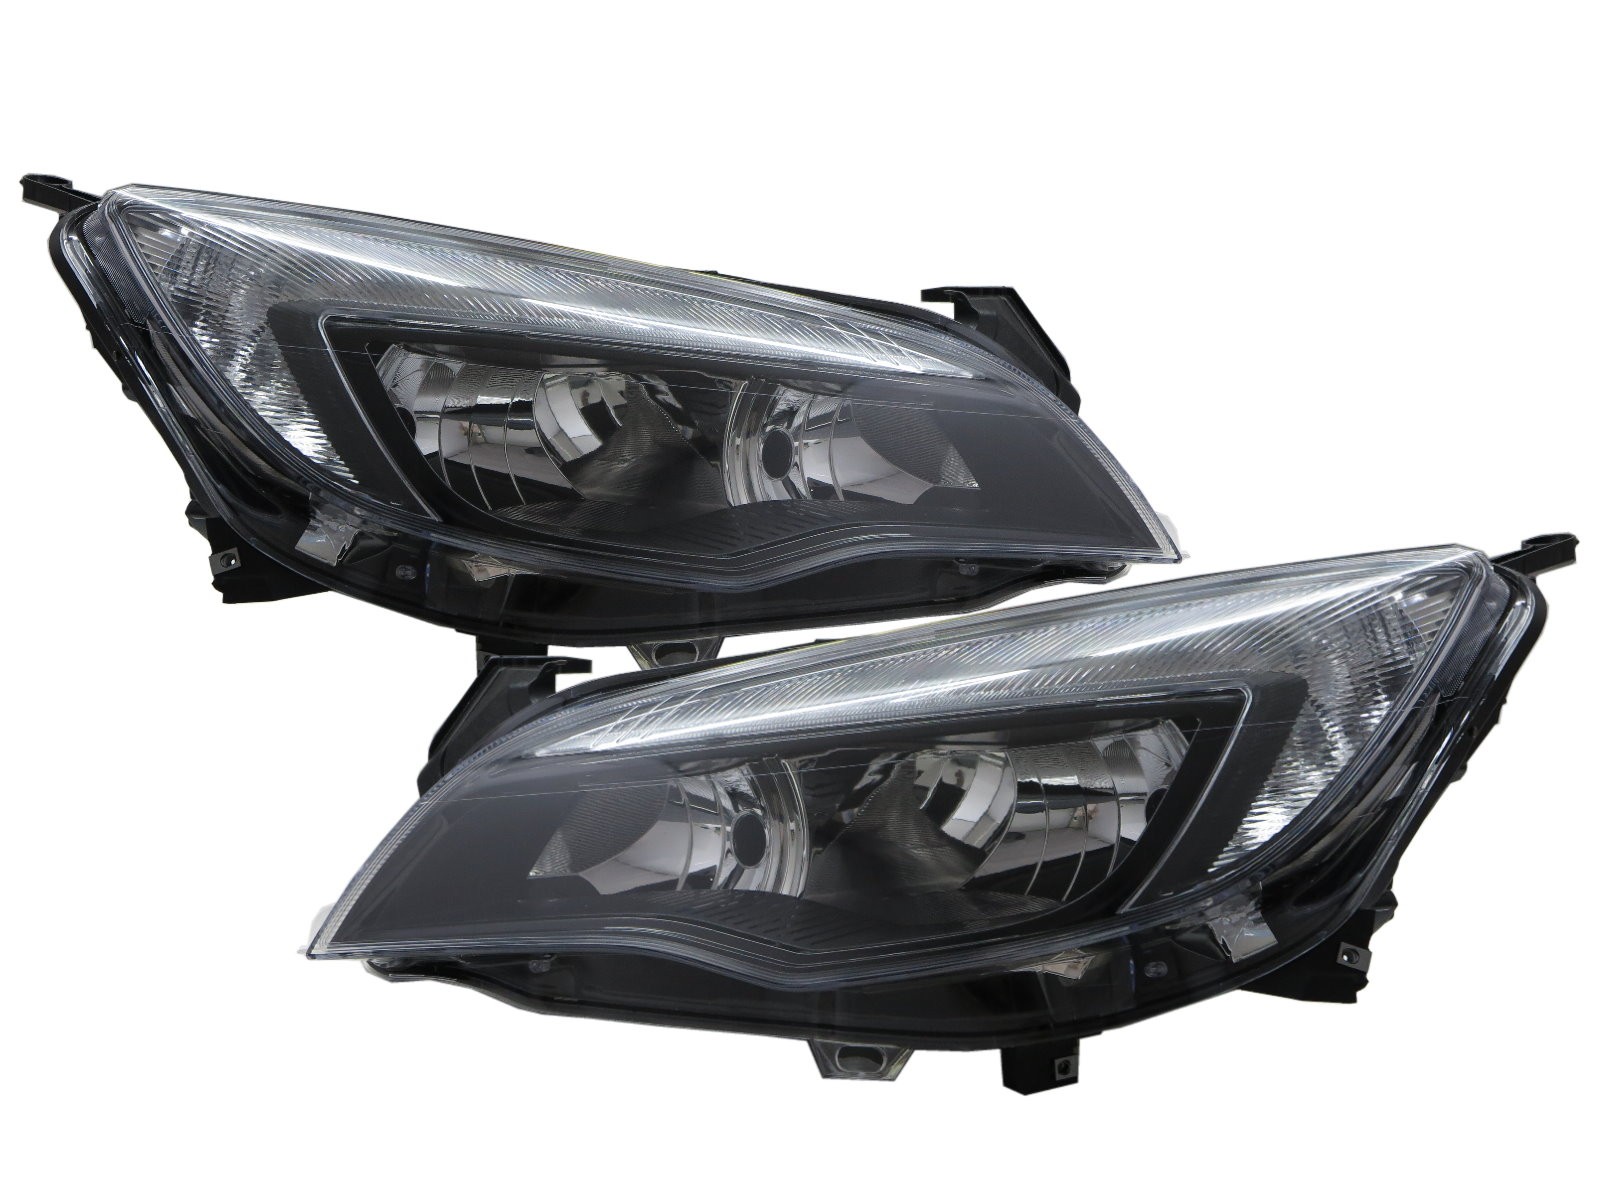 CrazyTheGod Astra J 2010-2012 Hatchback 5D Clear Headlight Headlamp Black for OPEL LHD